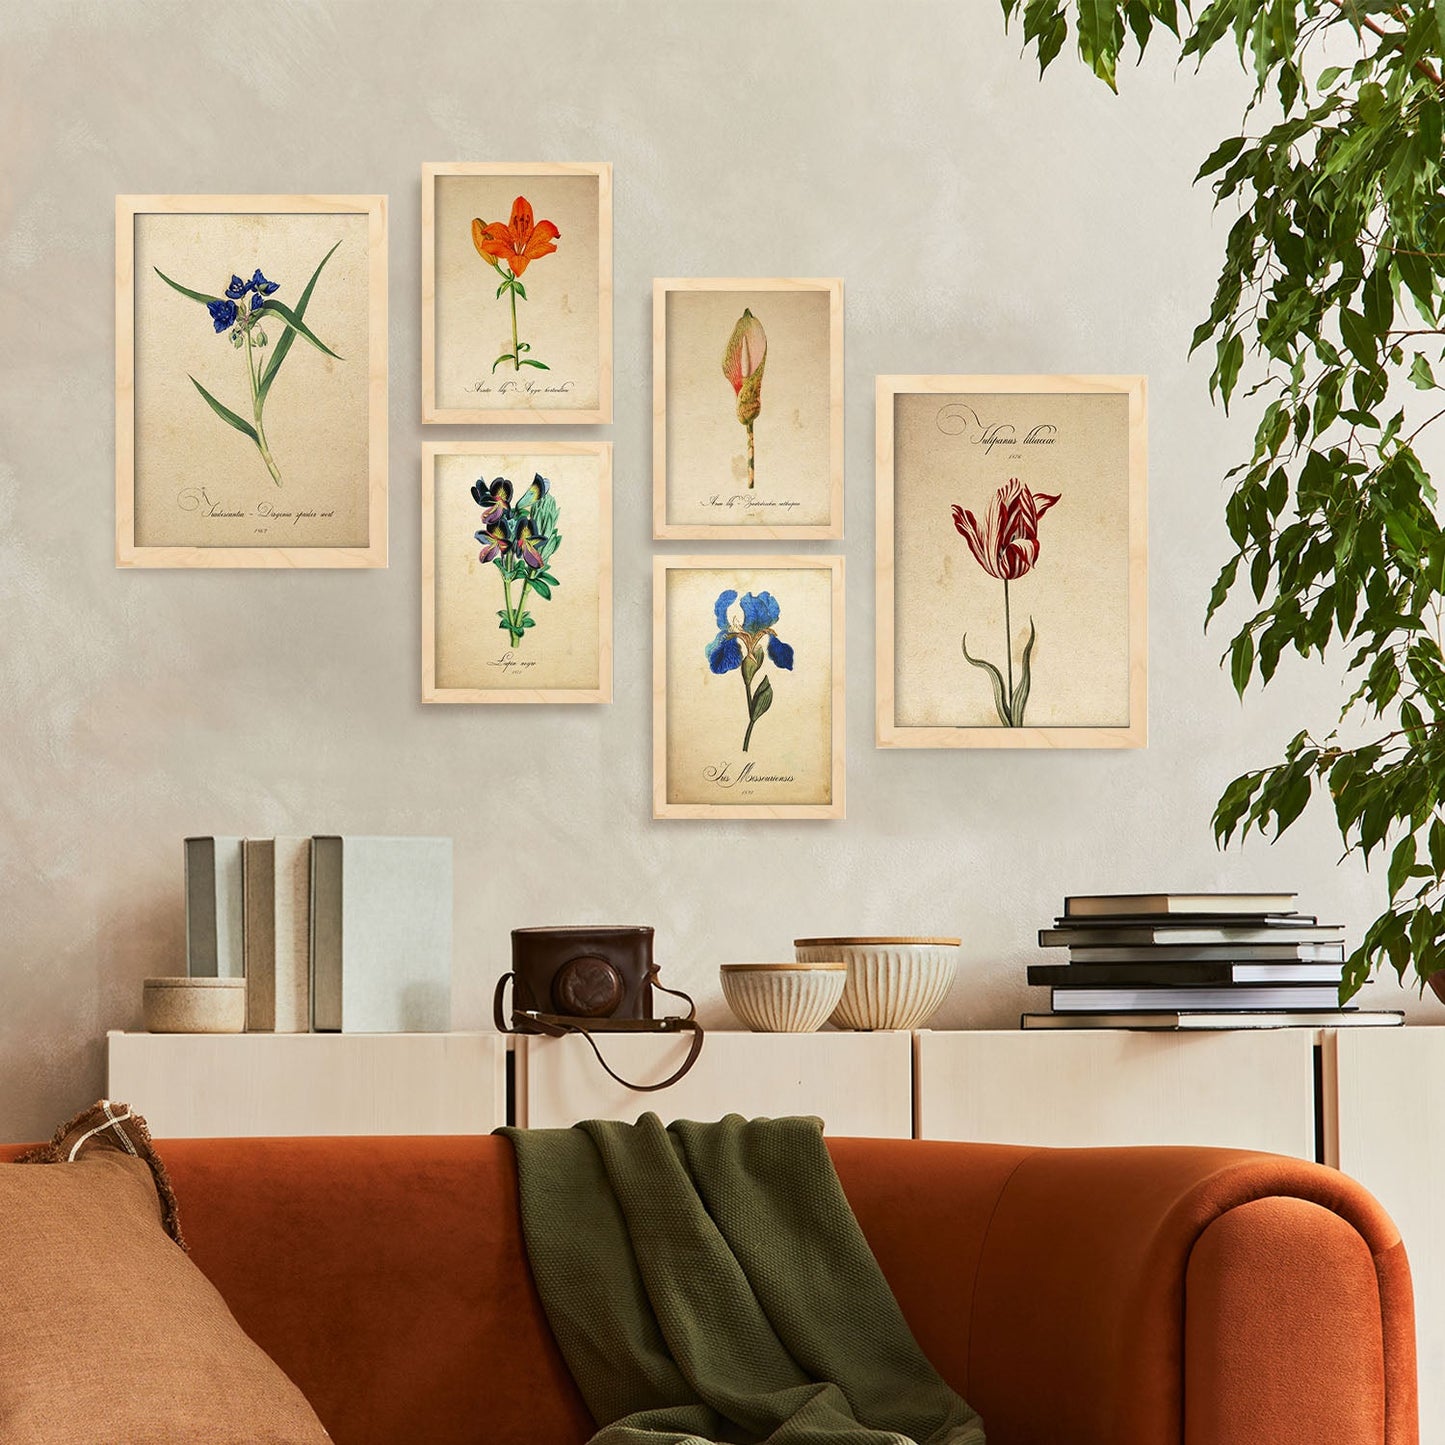 Nacnic botanica azul rojo. Aesthetic Wall Art Prints for Bedroom or Living Room Design.